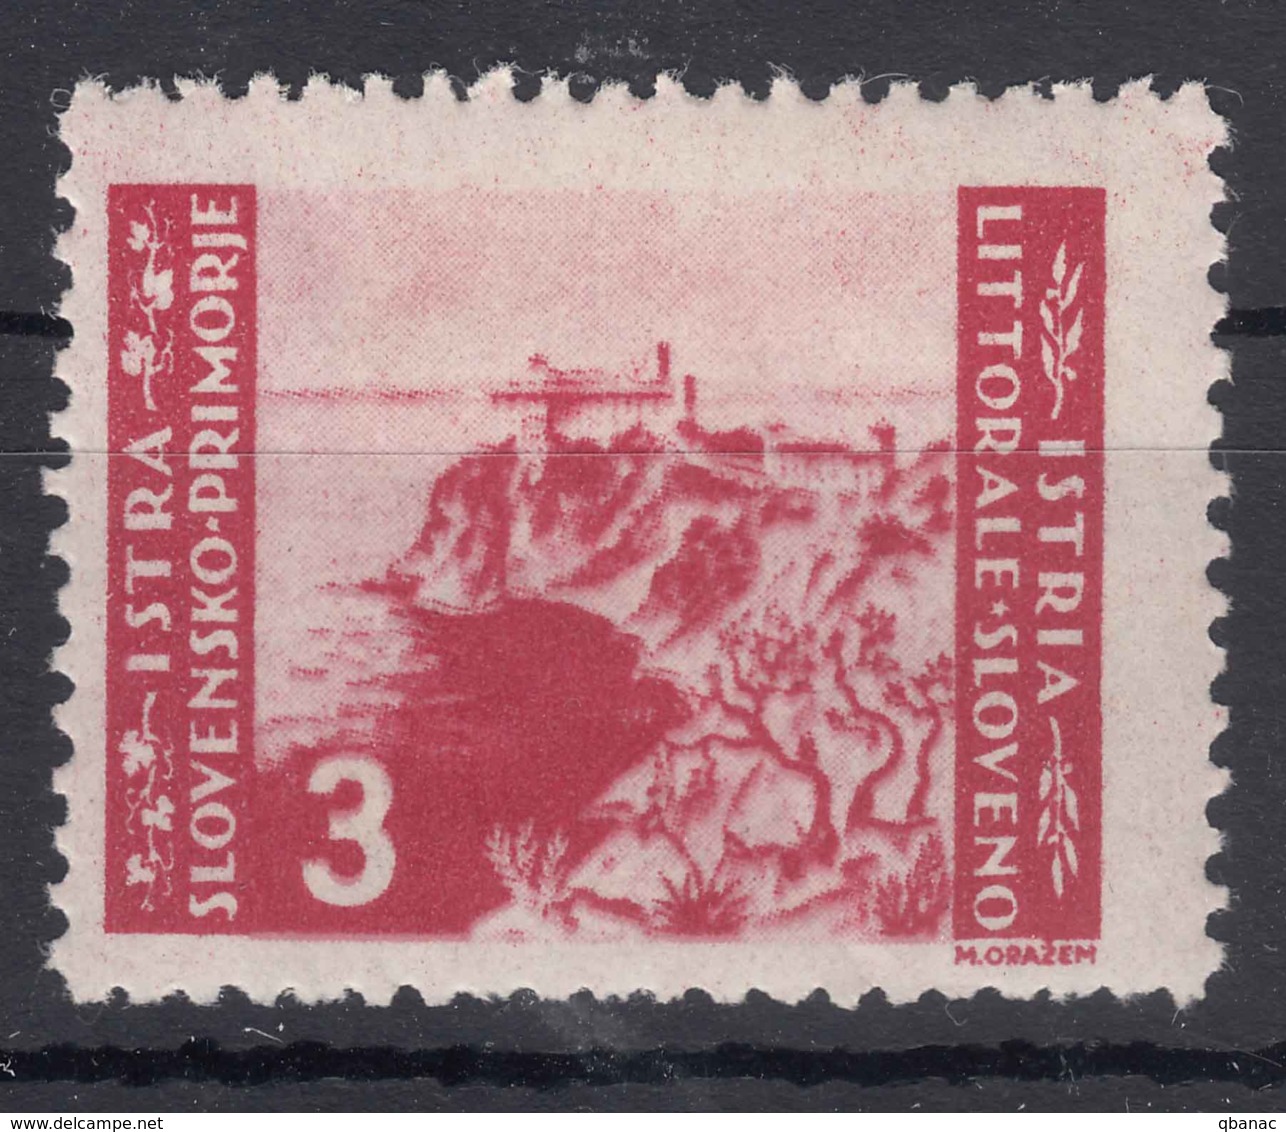 Istria Litorale Yugoslavia Occupation, 1946 Sassone#65 Mint Hinged - Yugoslavian Occ.: Istria